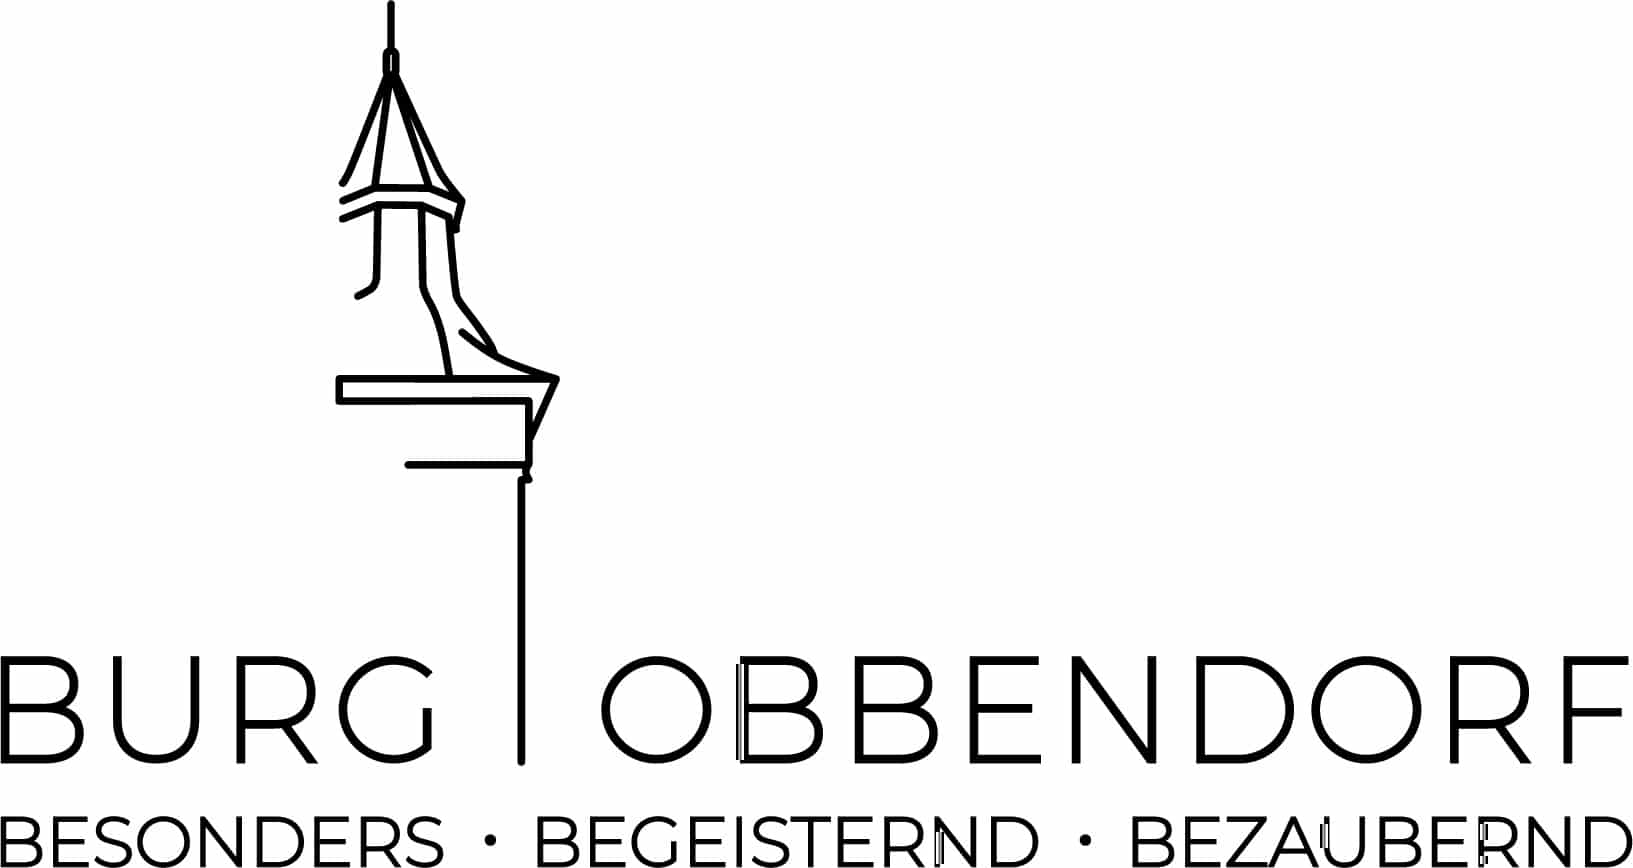 Burg Obbendorf